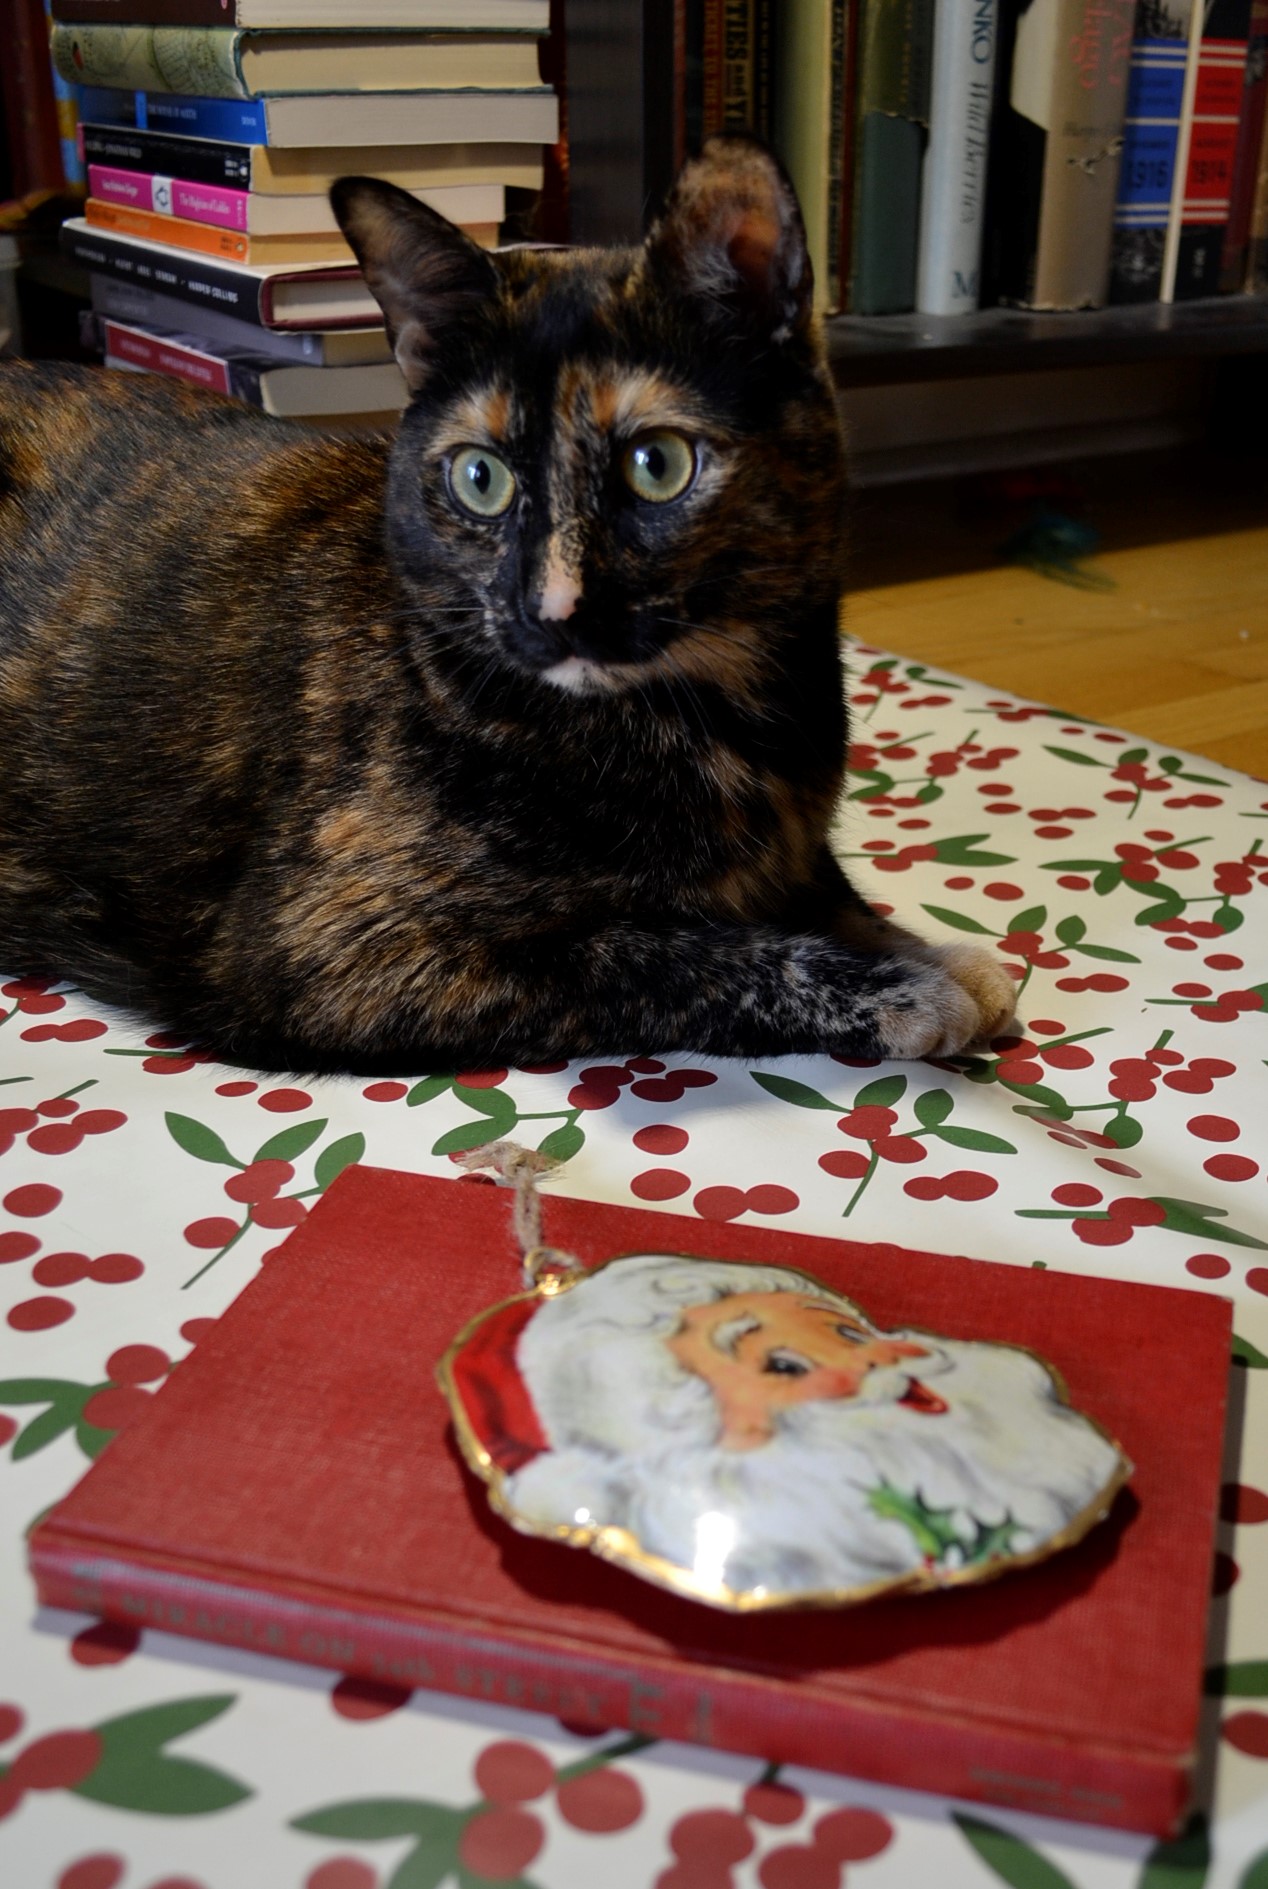 Rusalka sits behind an aged red book and a Santa ornament.